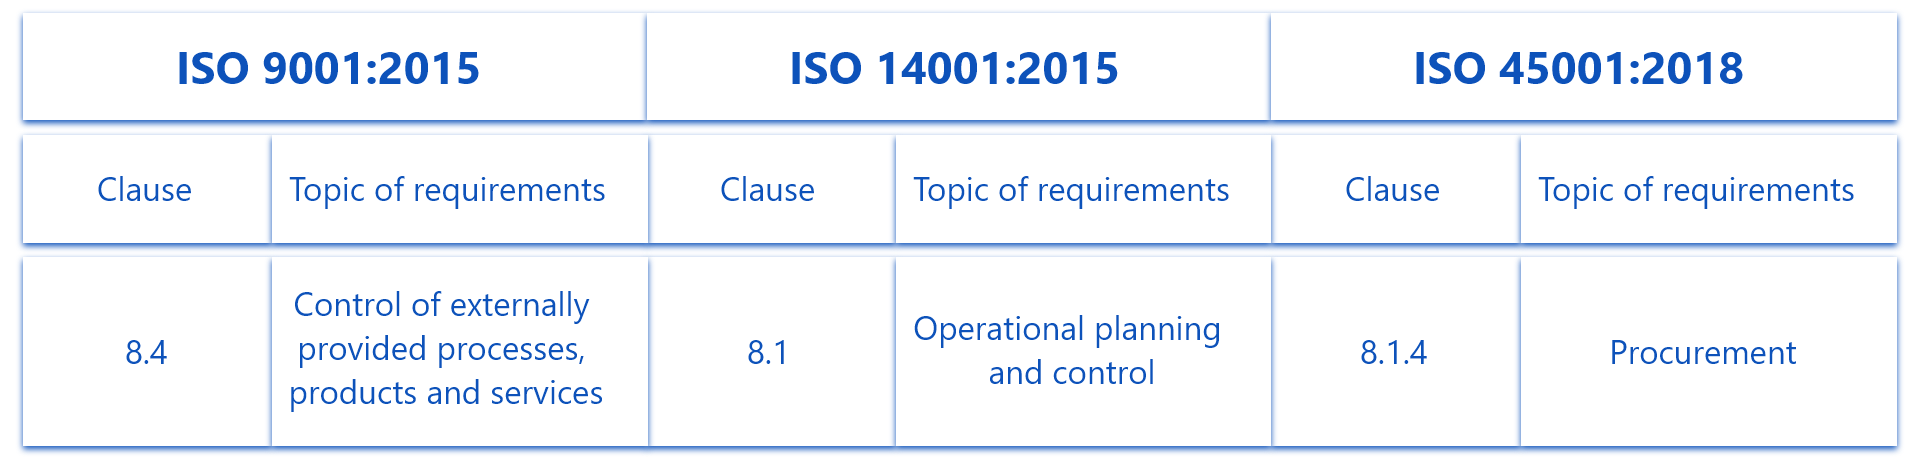 iso9001-2015-iso14001-2015-iso45001-2018